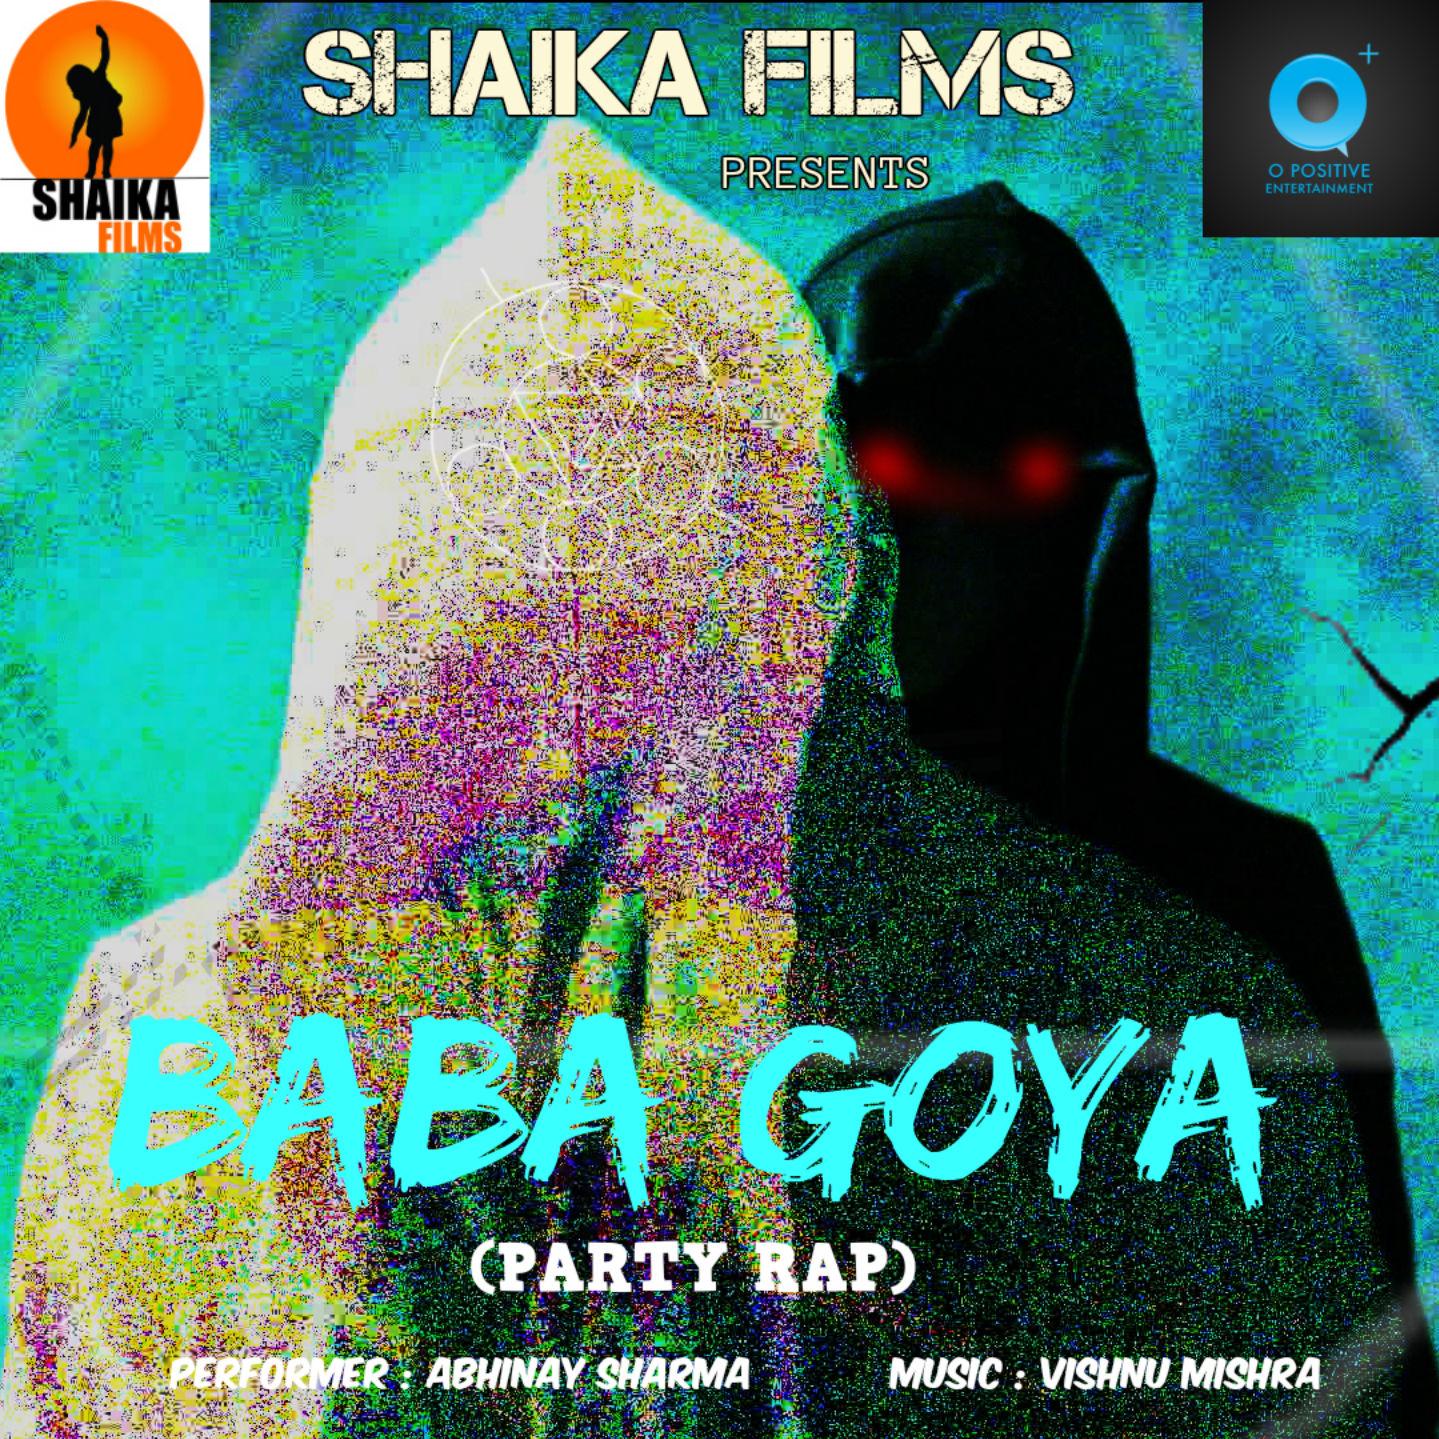 Baba Goya (Party Rap)